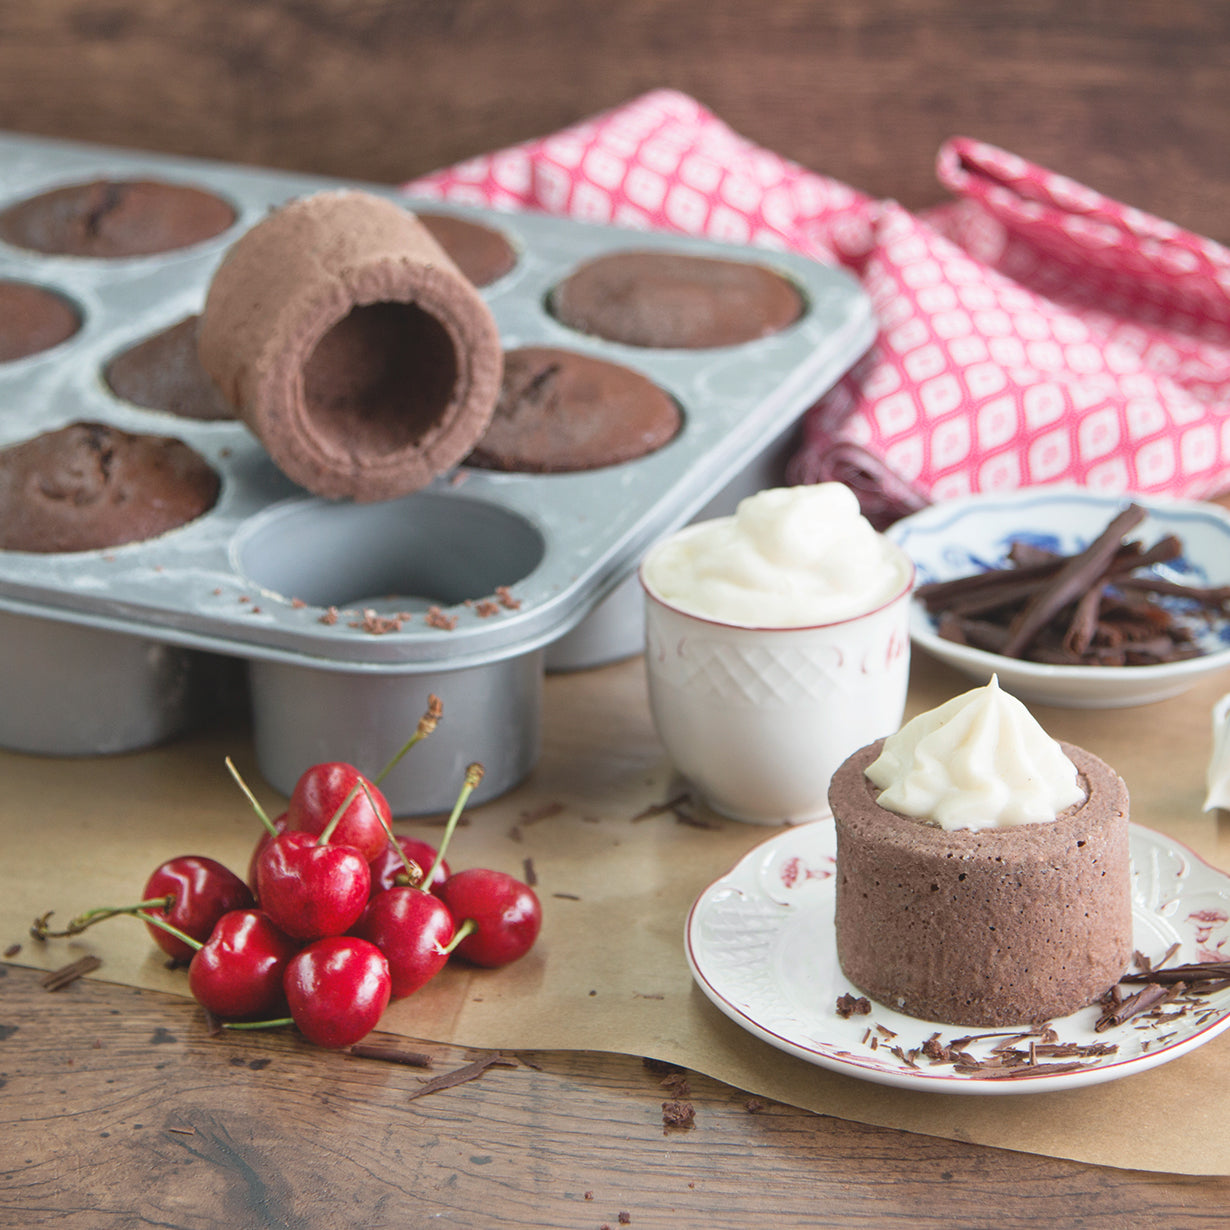 STÄDTER We love baking - 24 cups Mini bundt pan – Alko Kitchenware